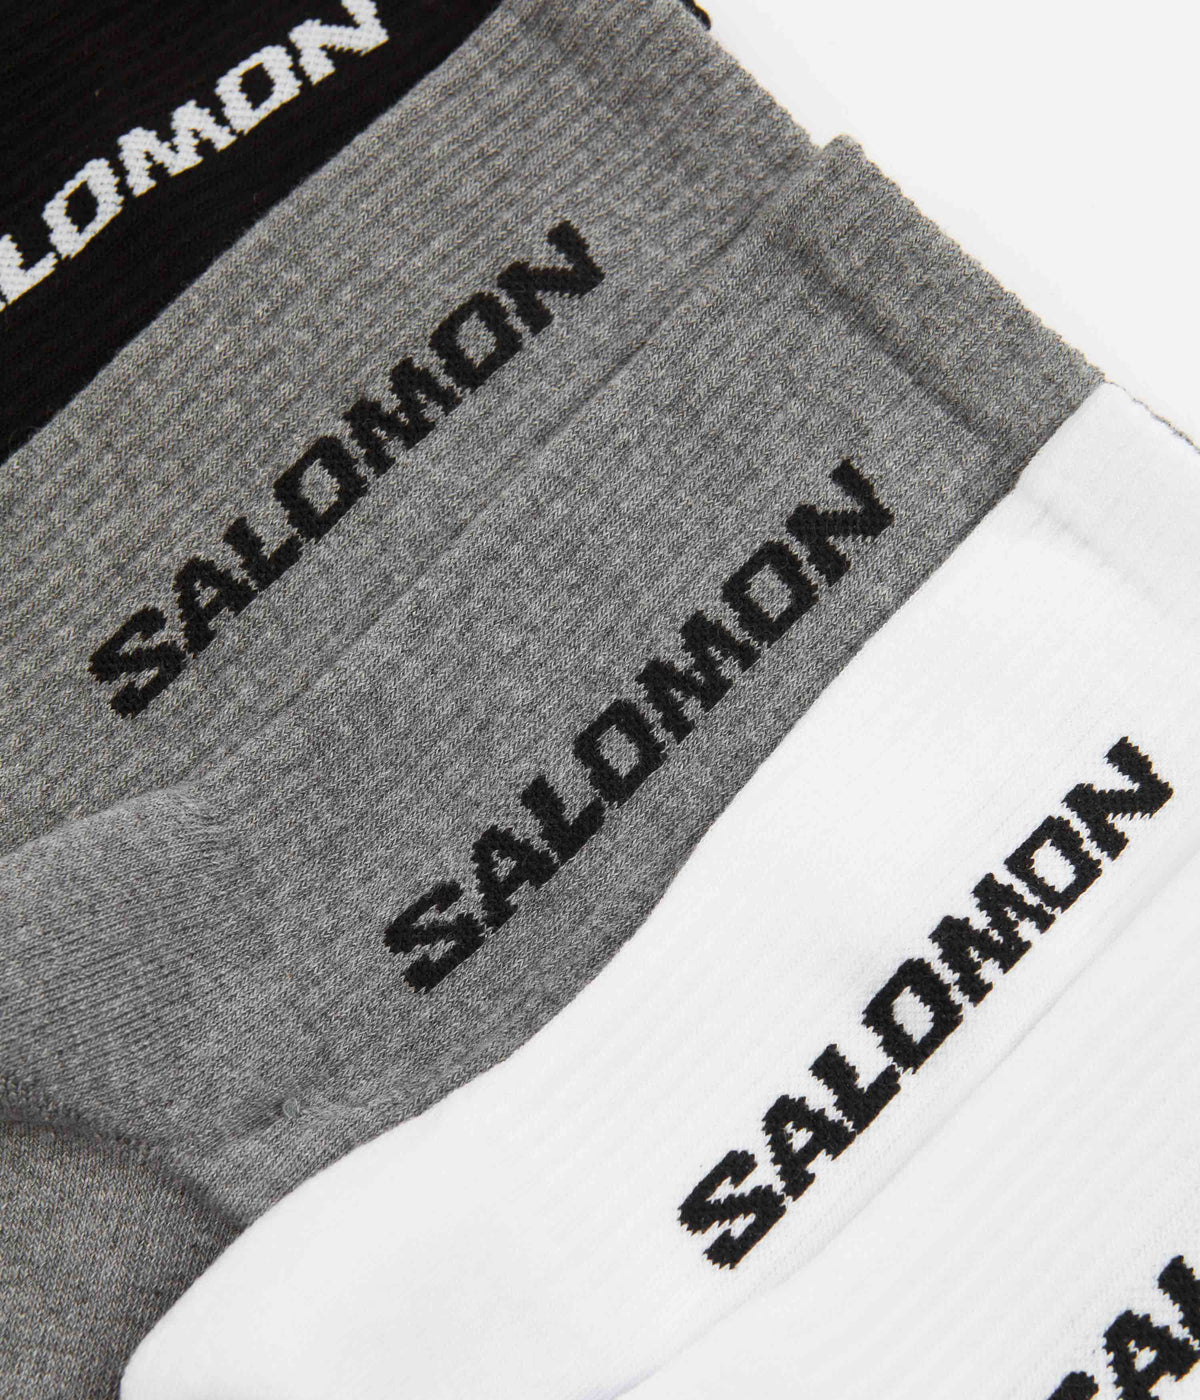 Rentmeester Gedrag af hebben Salomon Everyday Crew Socks (3 Pack) - Black / White / Med Grey Melang |  Always in Colour